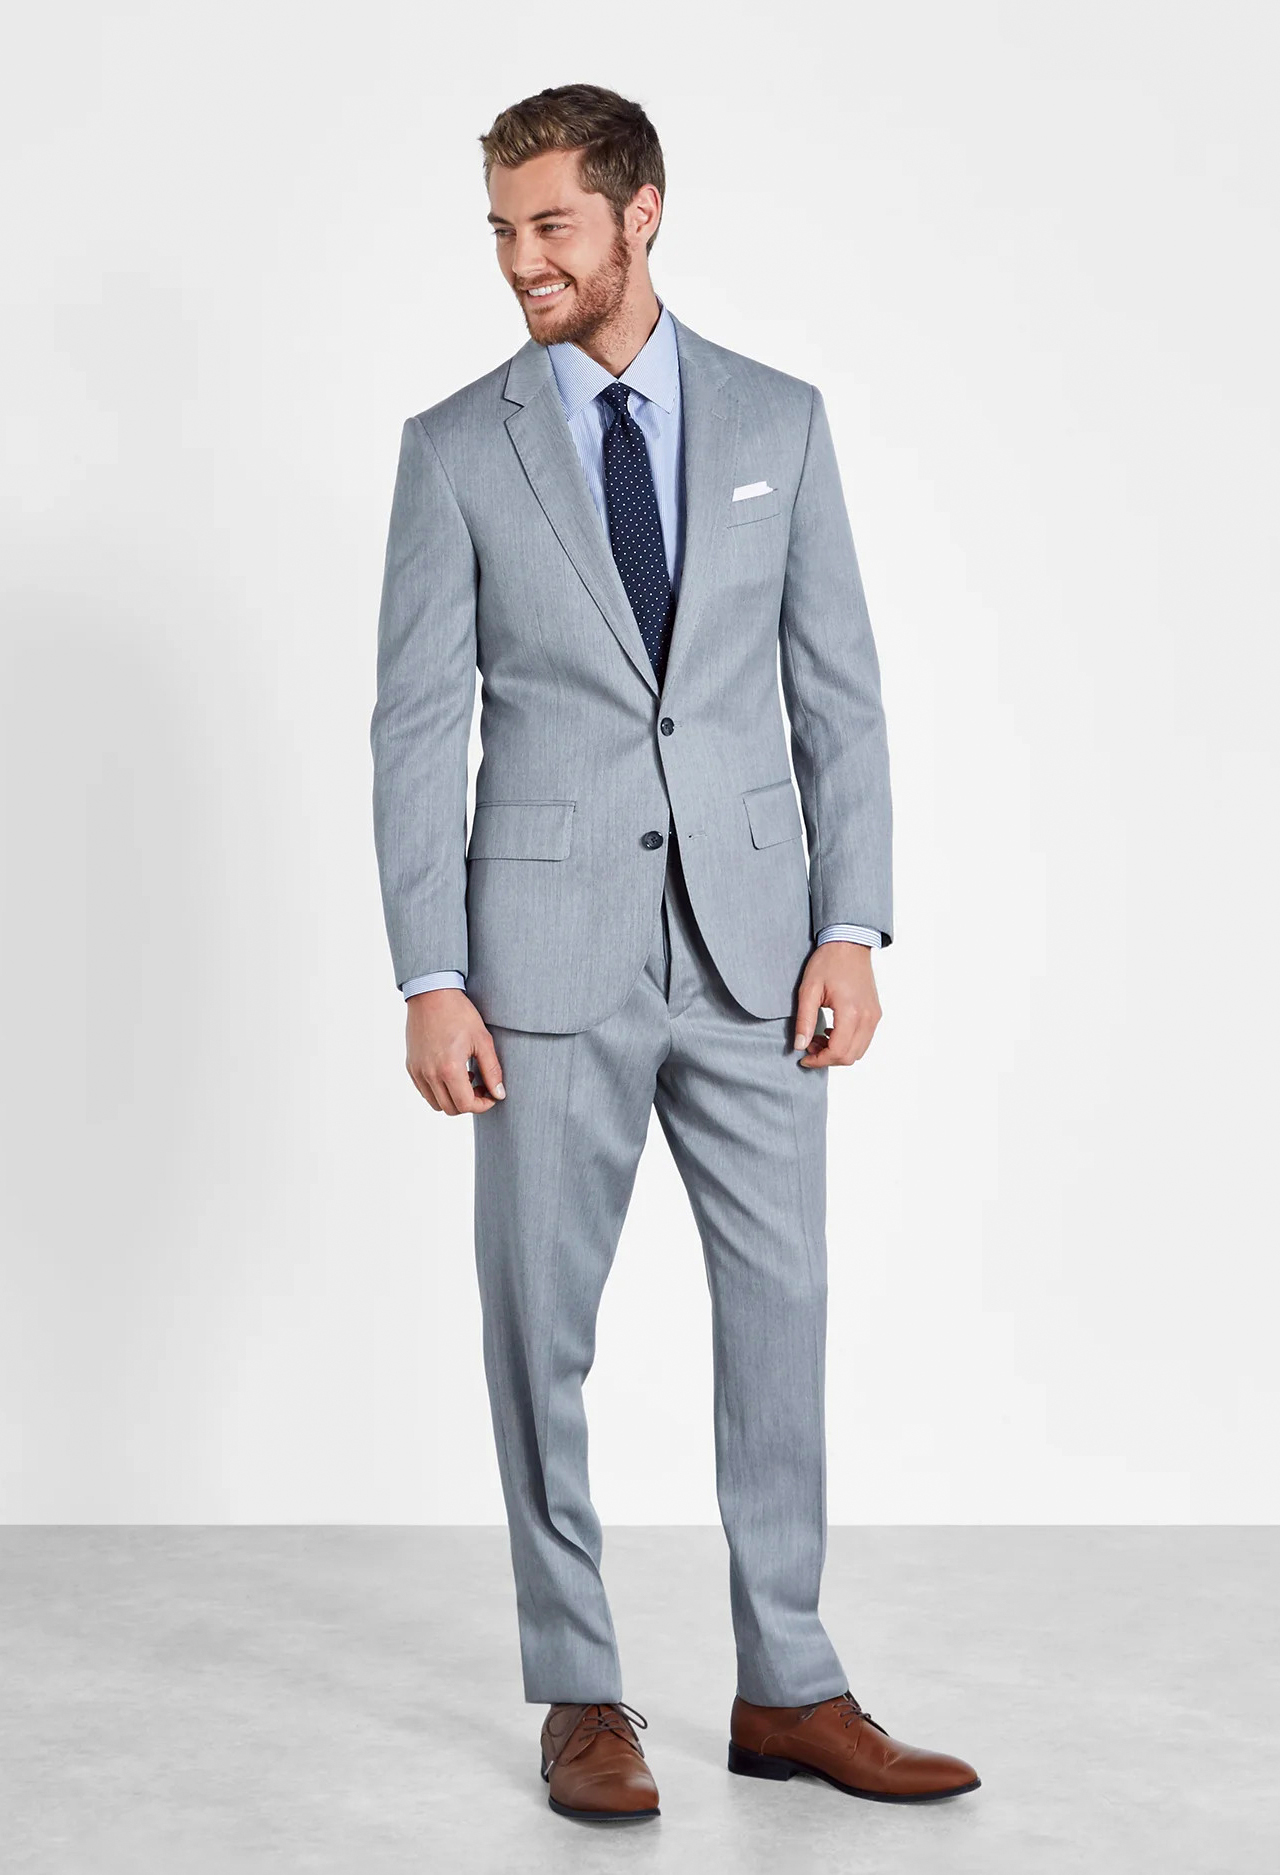 Light grey suit, light blue dress shirt and navy polka dot tie